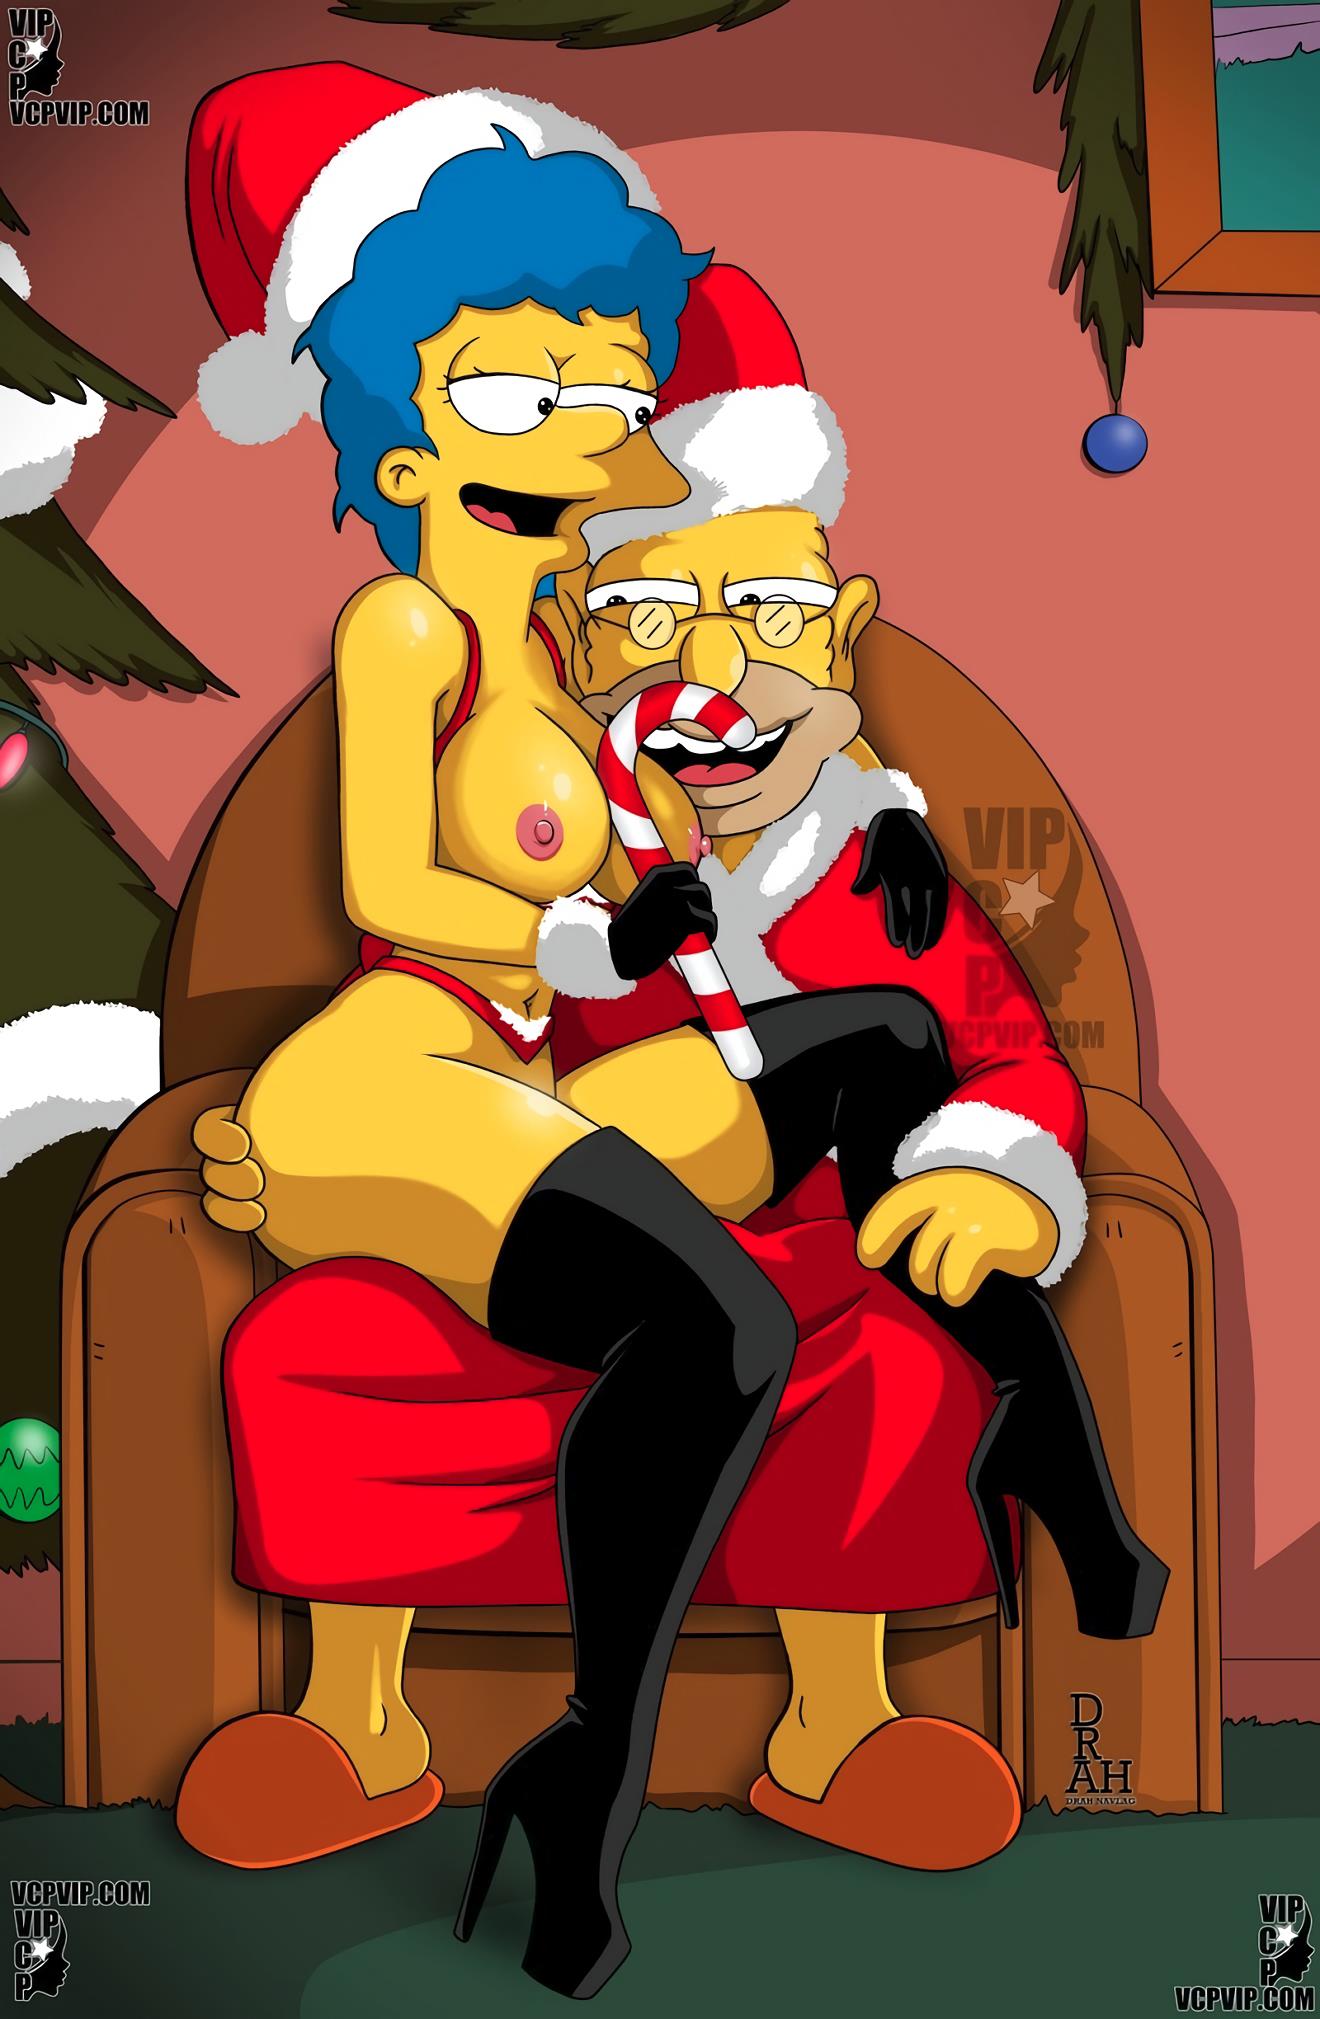 Especial de Natal para Marge